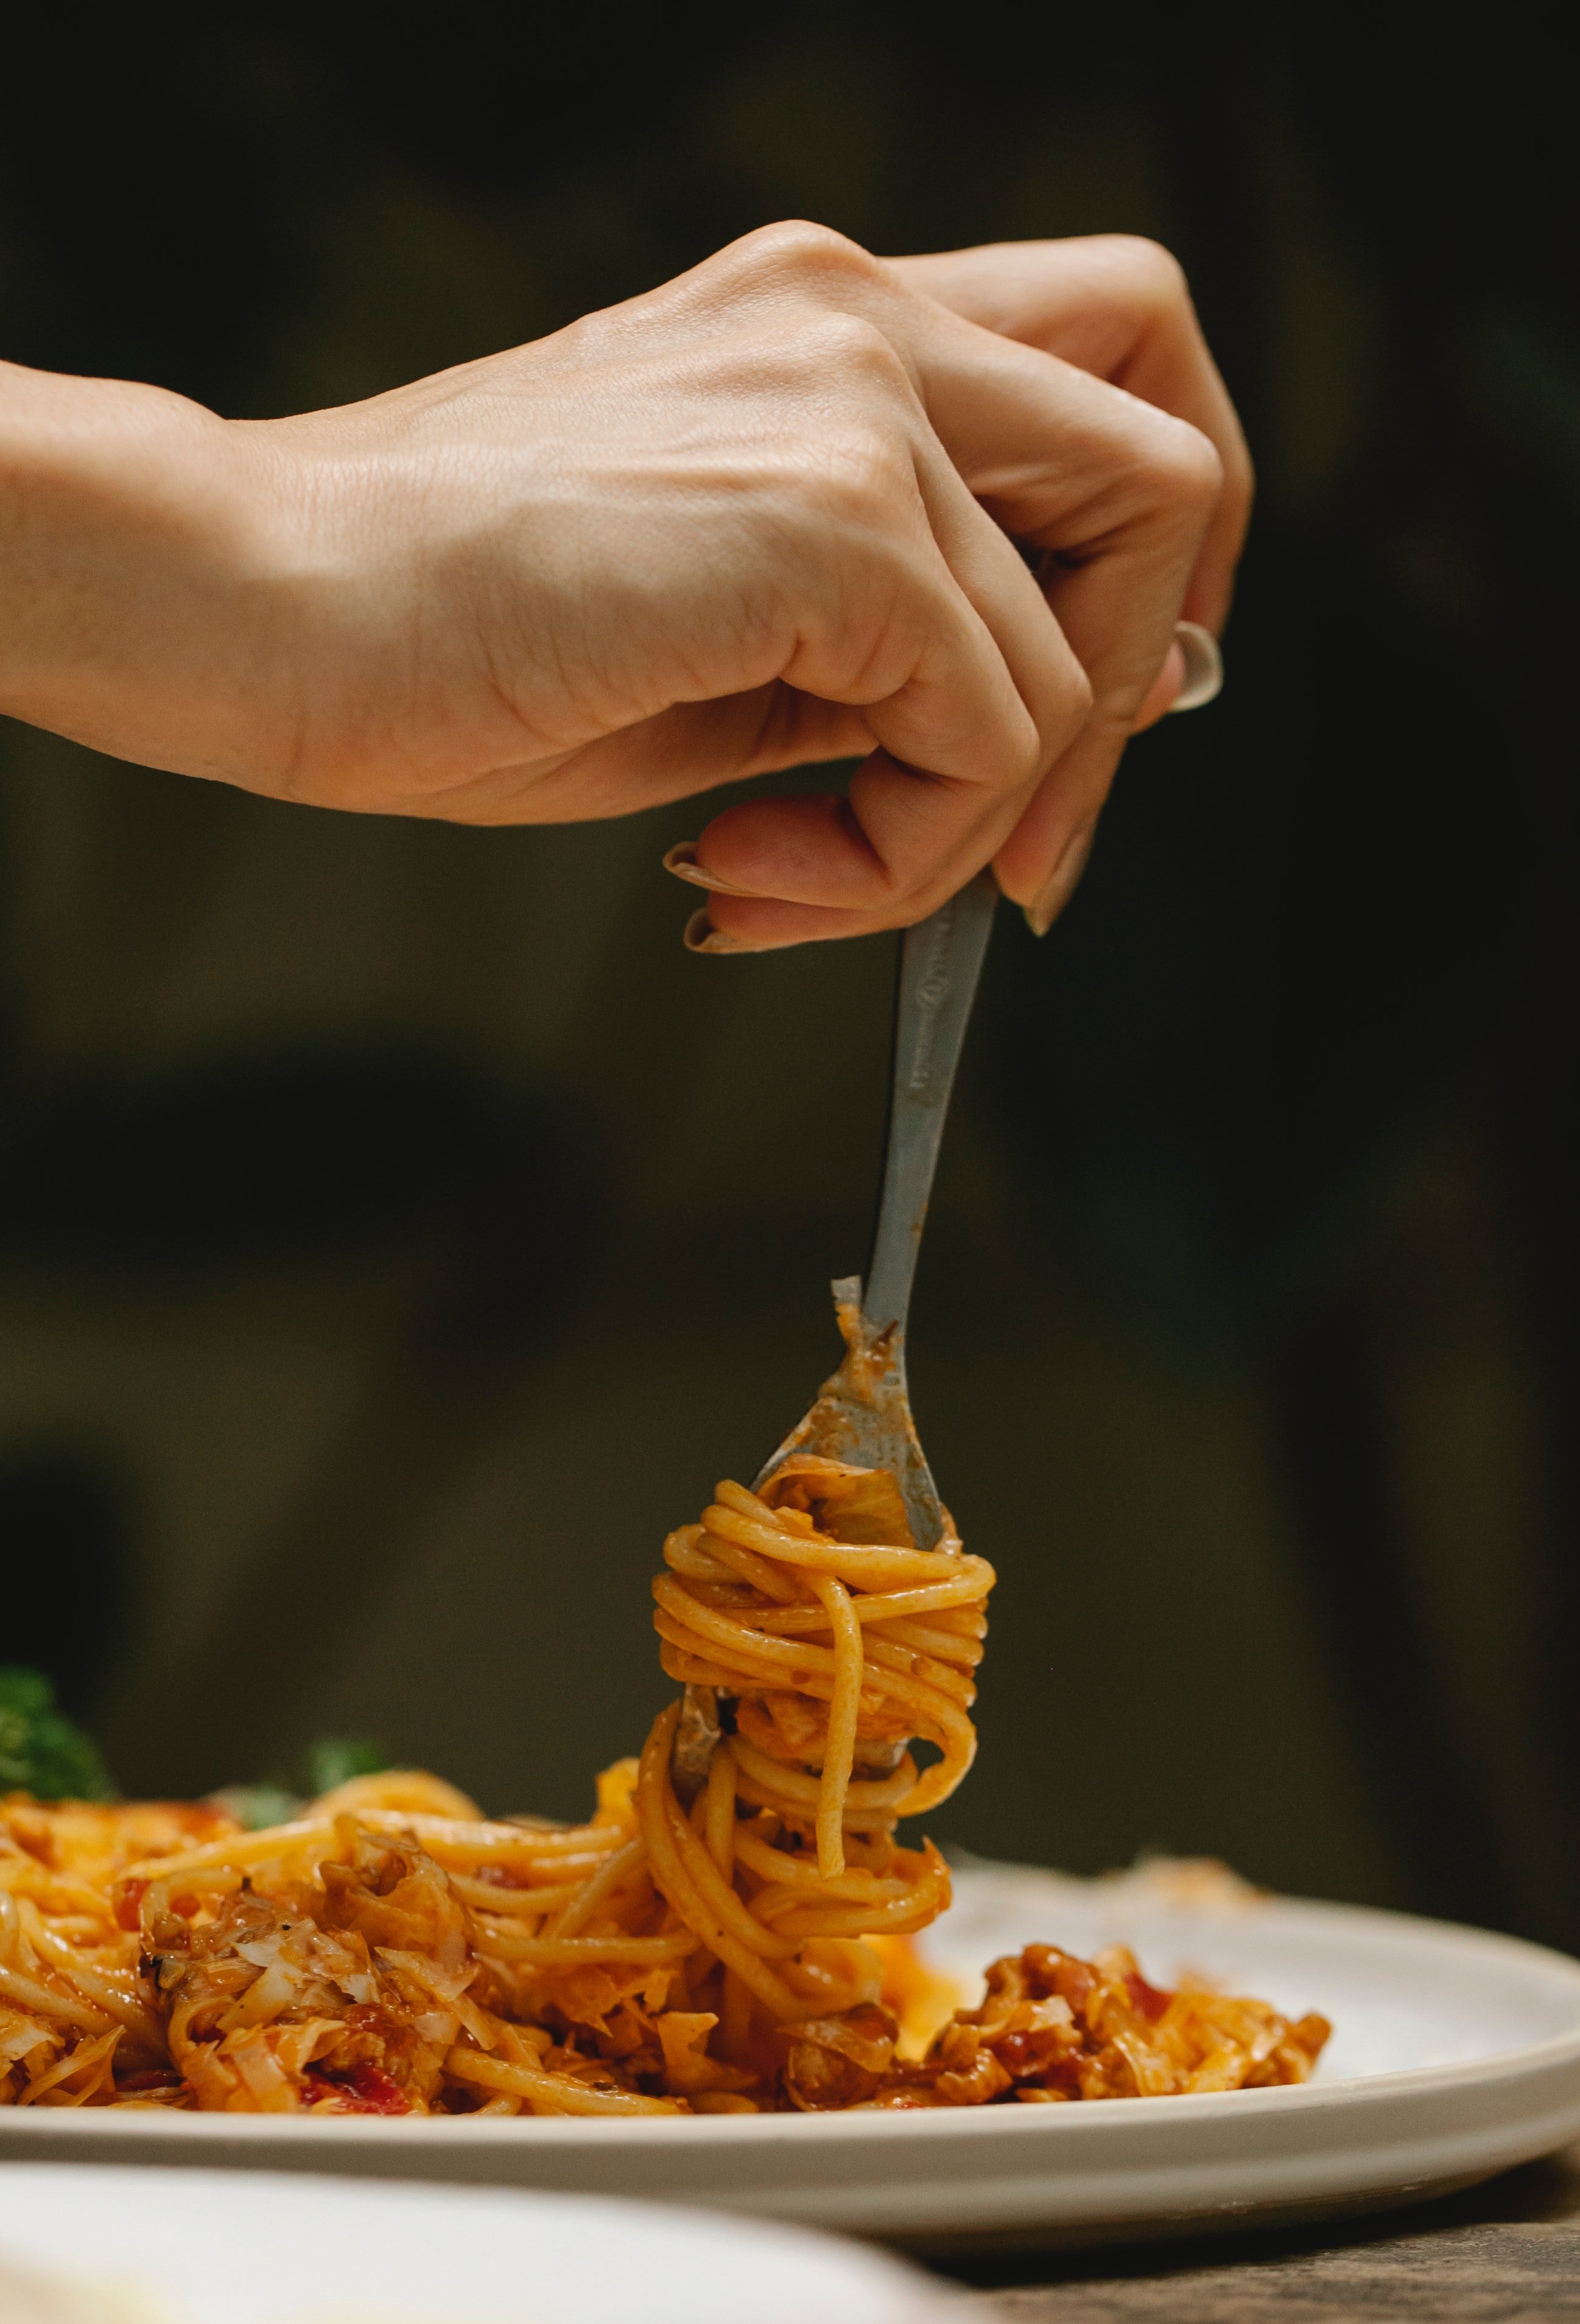 That fateful Italian dinner night | Source: Pexels